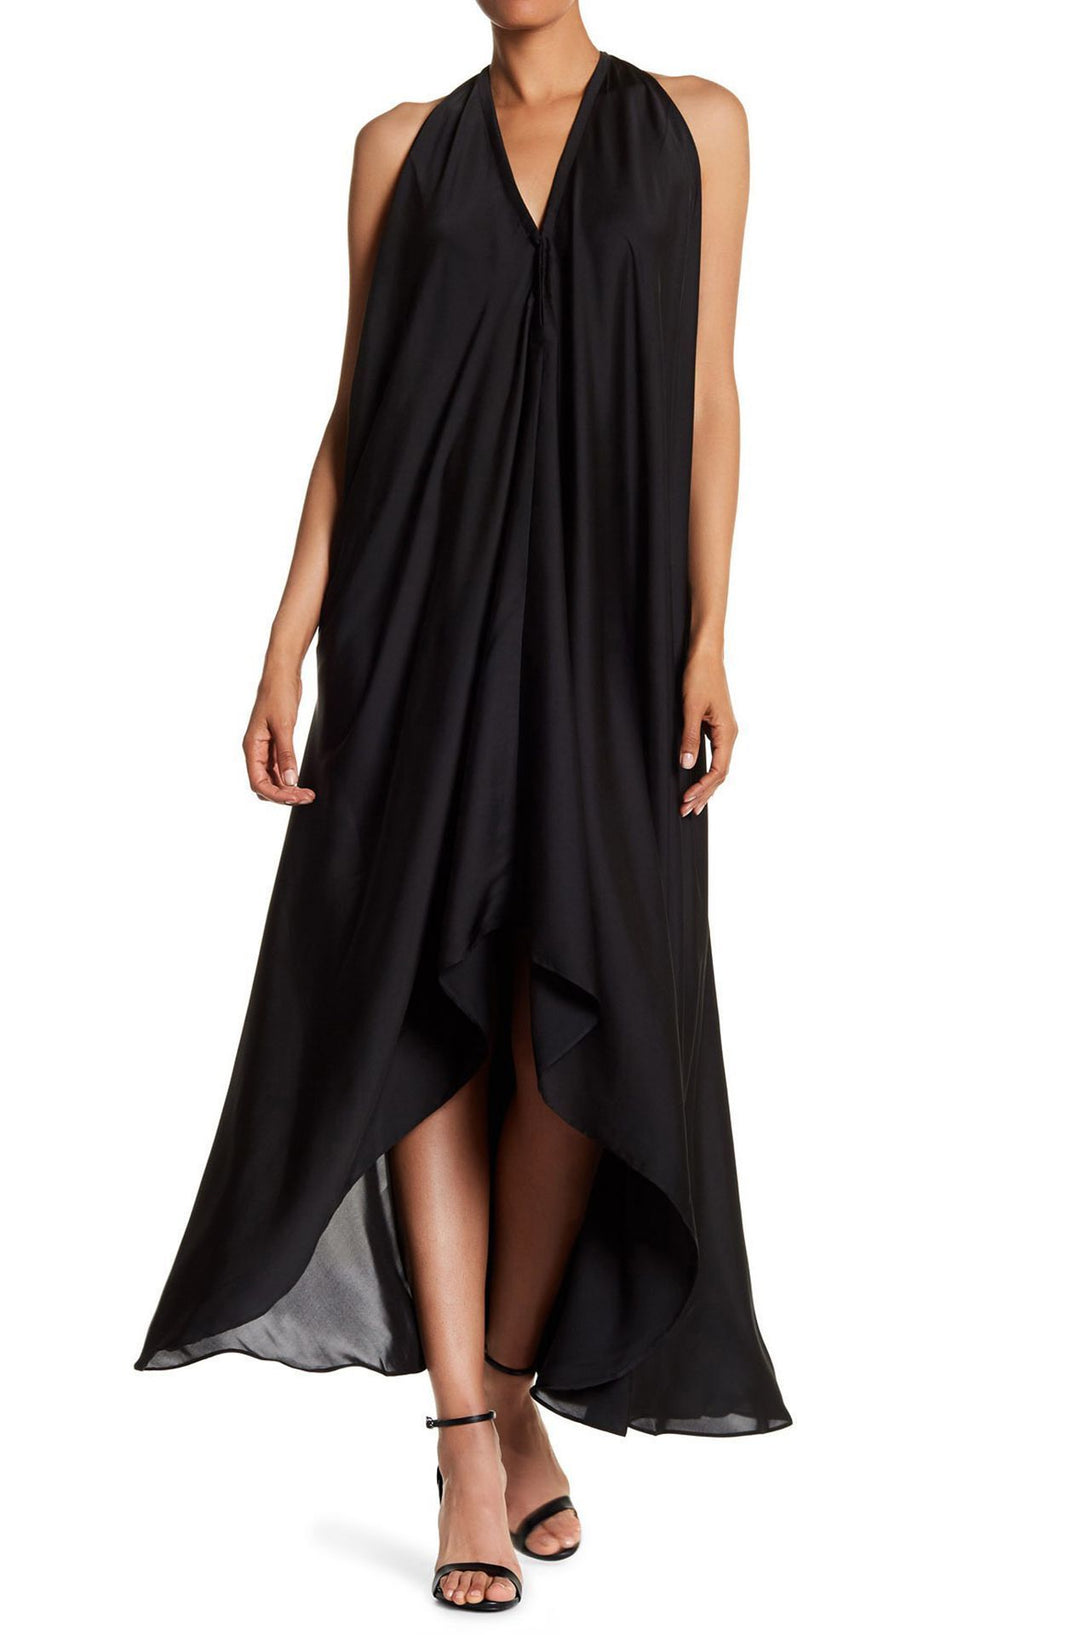 "long black backless dress" "black silk maxi dress" "Shahida Parides" "black dress long dress"